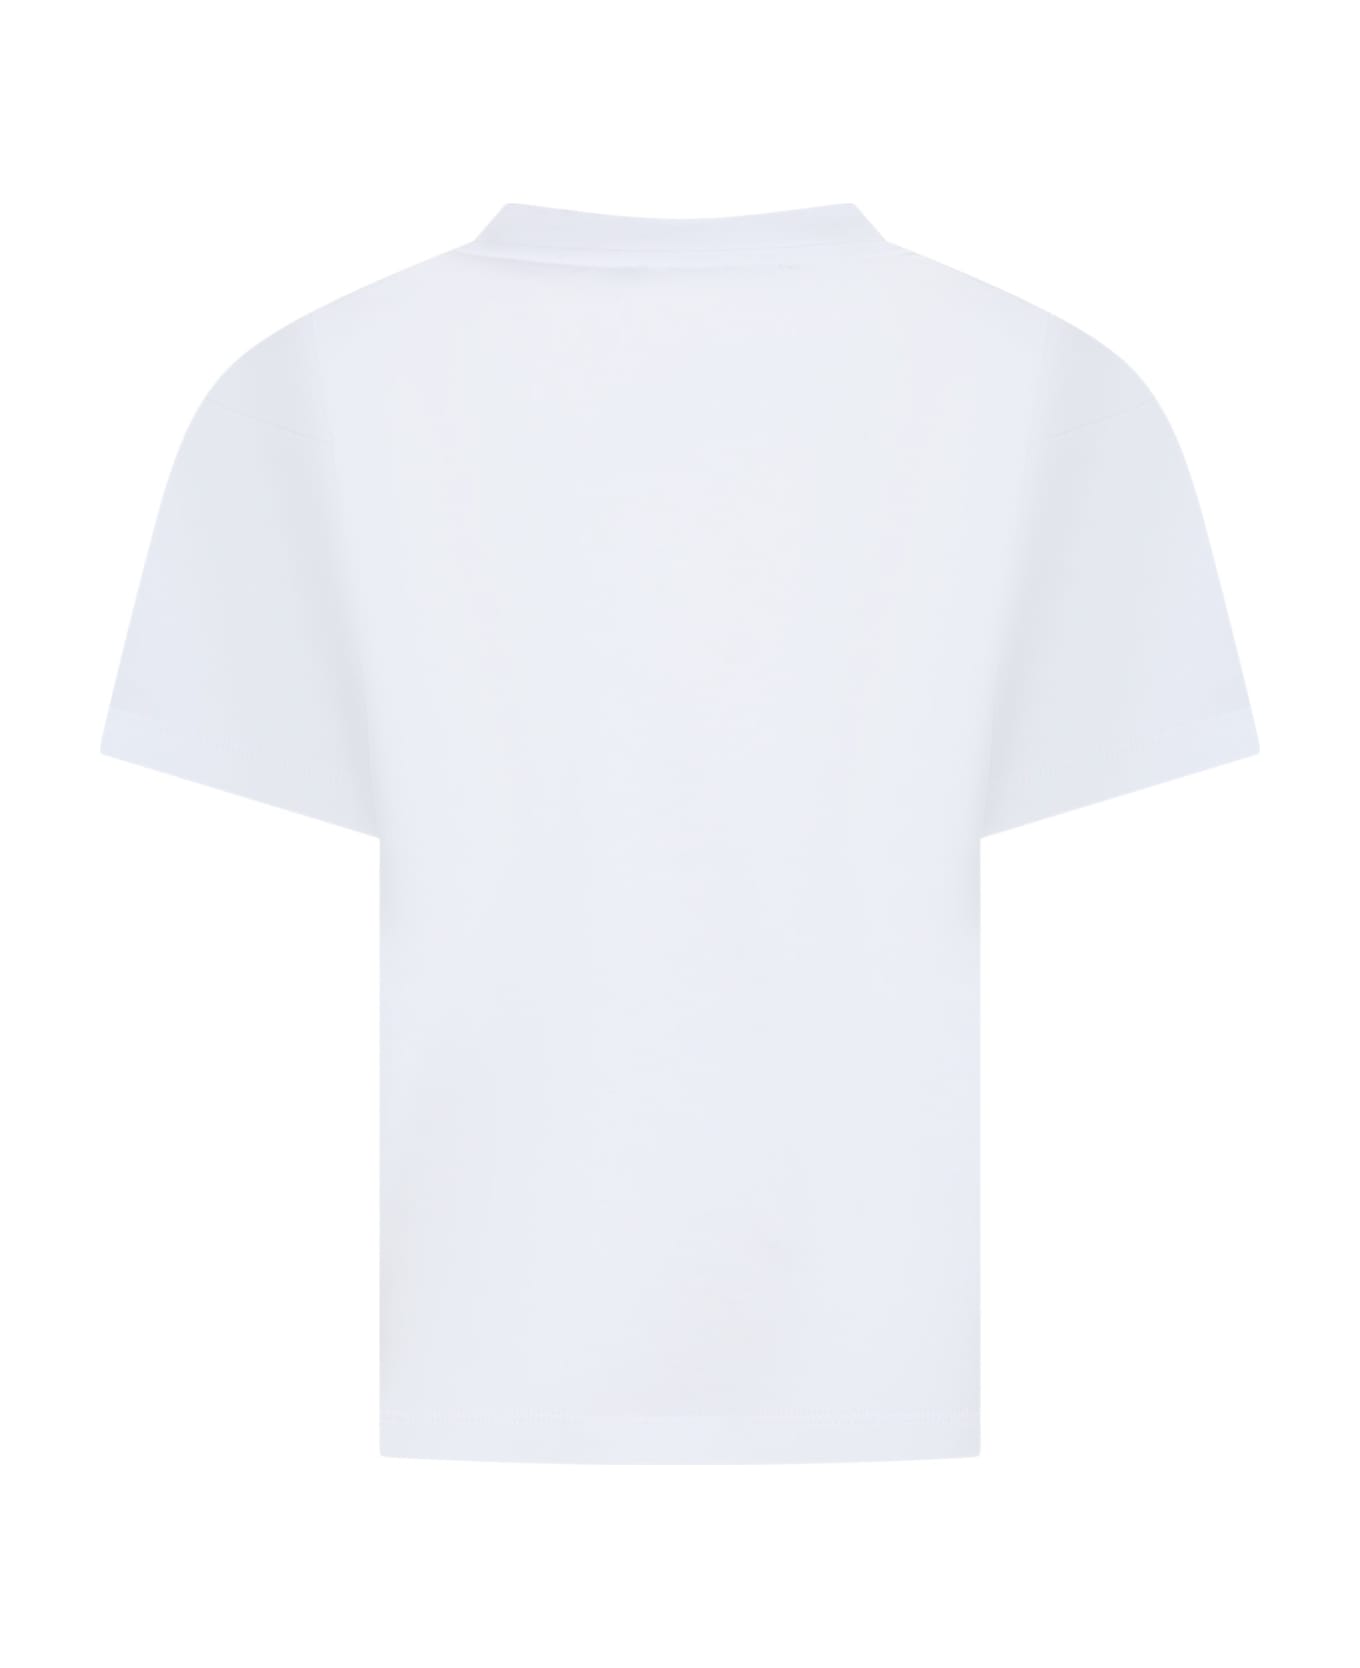 Balmain White T-shirt For Girl With Logo - White